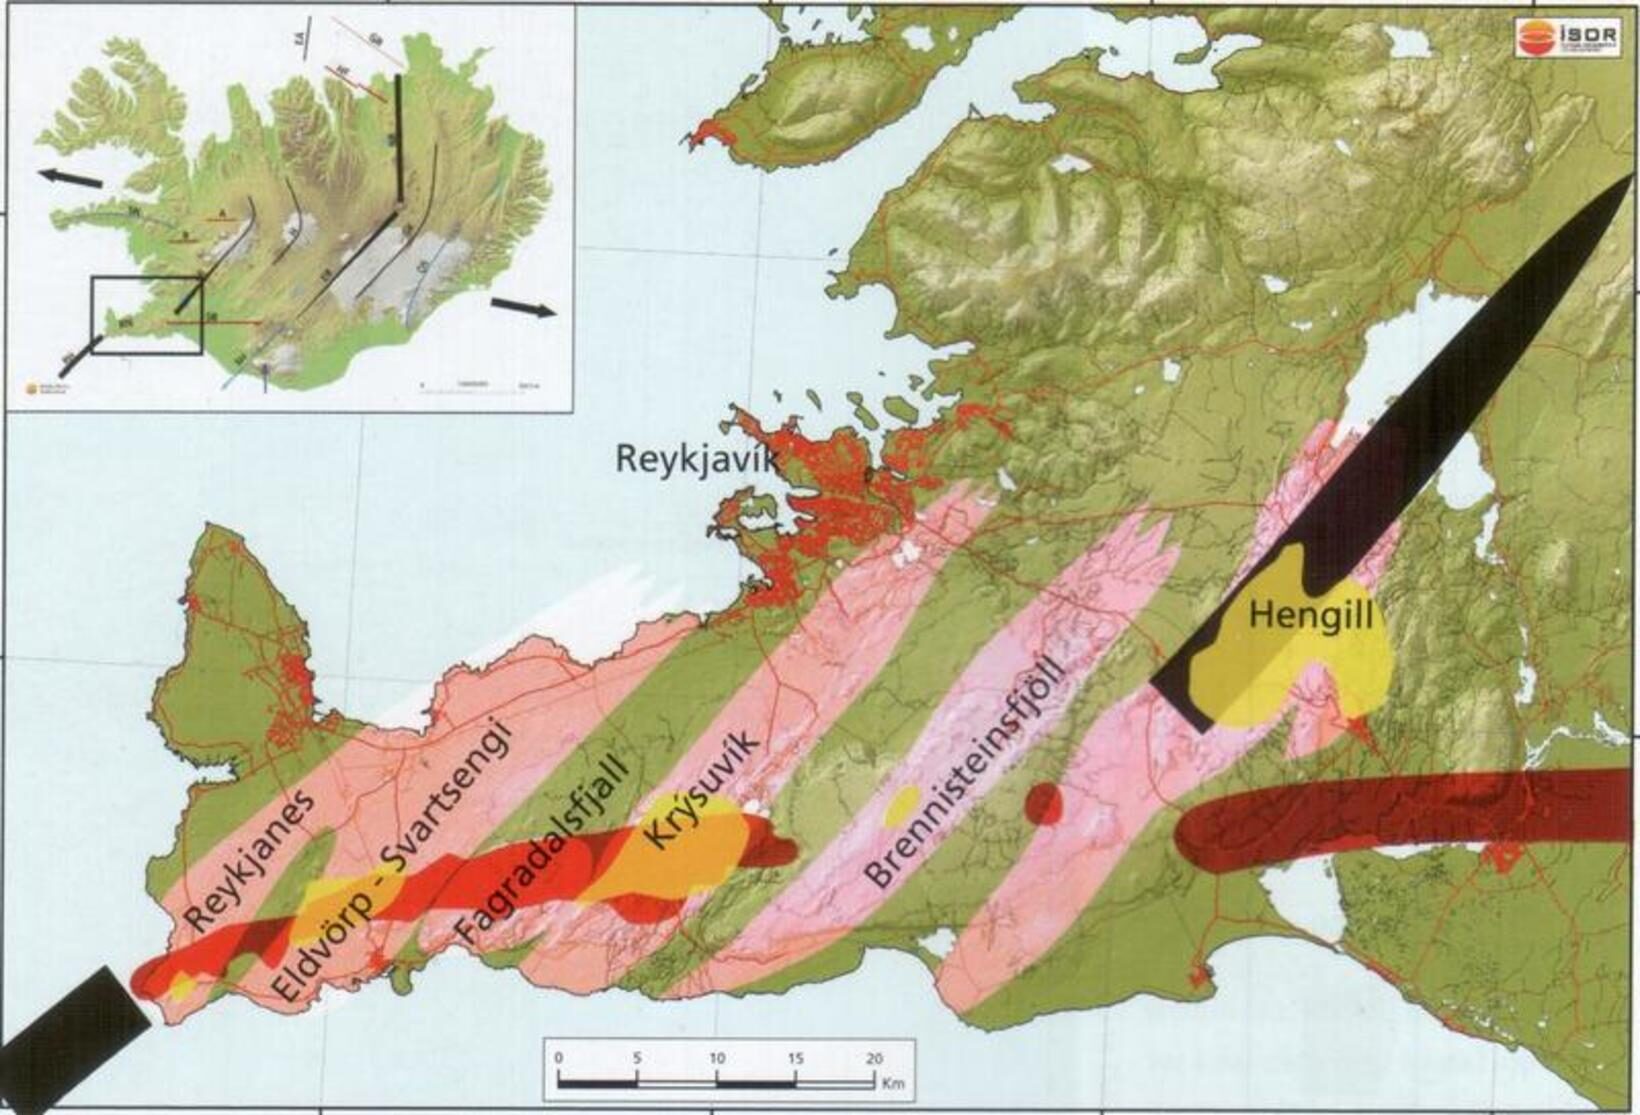 Volcanic systems on the Reykjanes peninsula